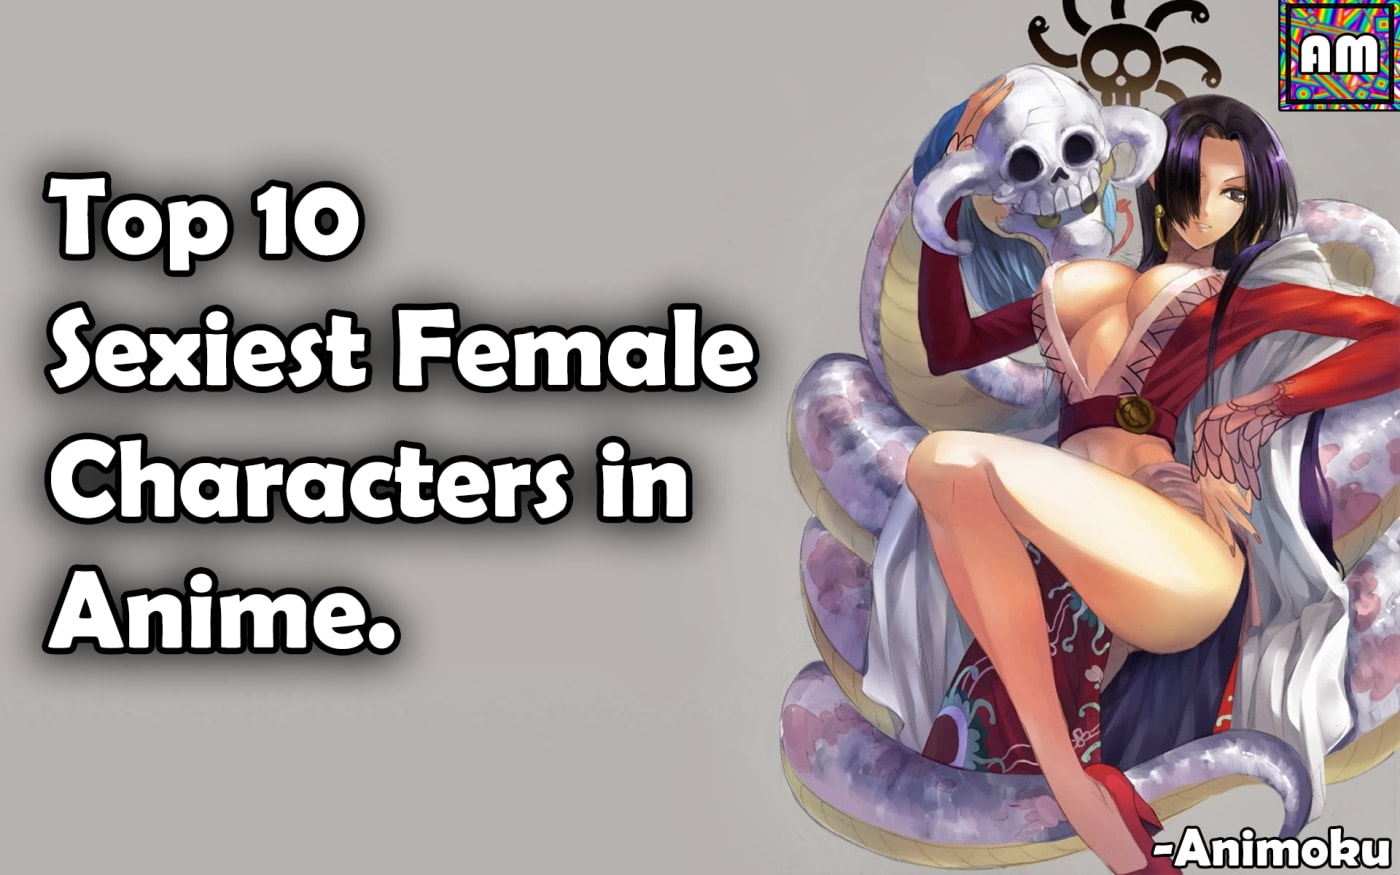 Hot Female Characters